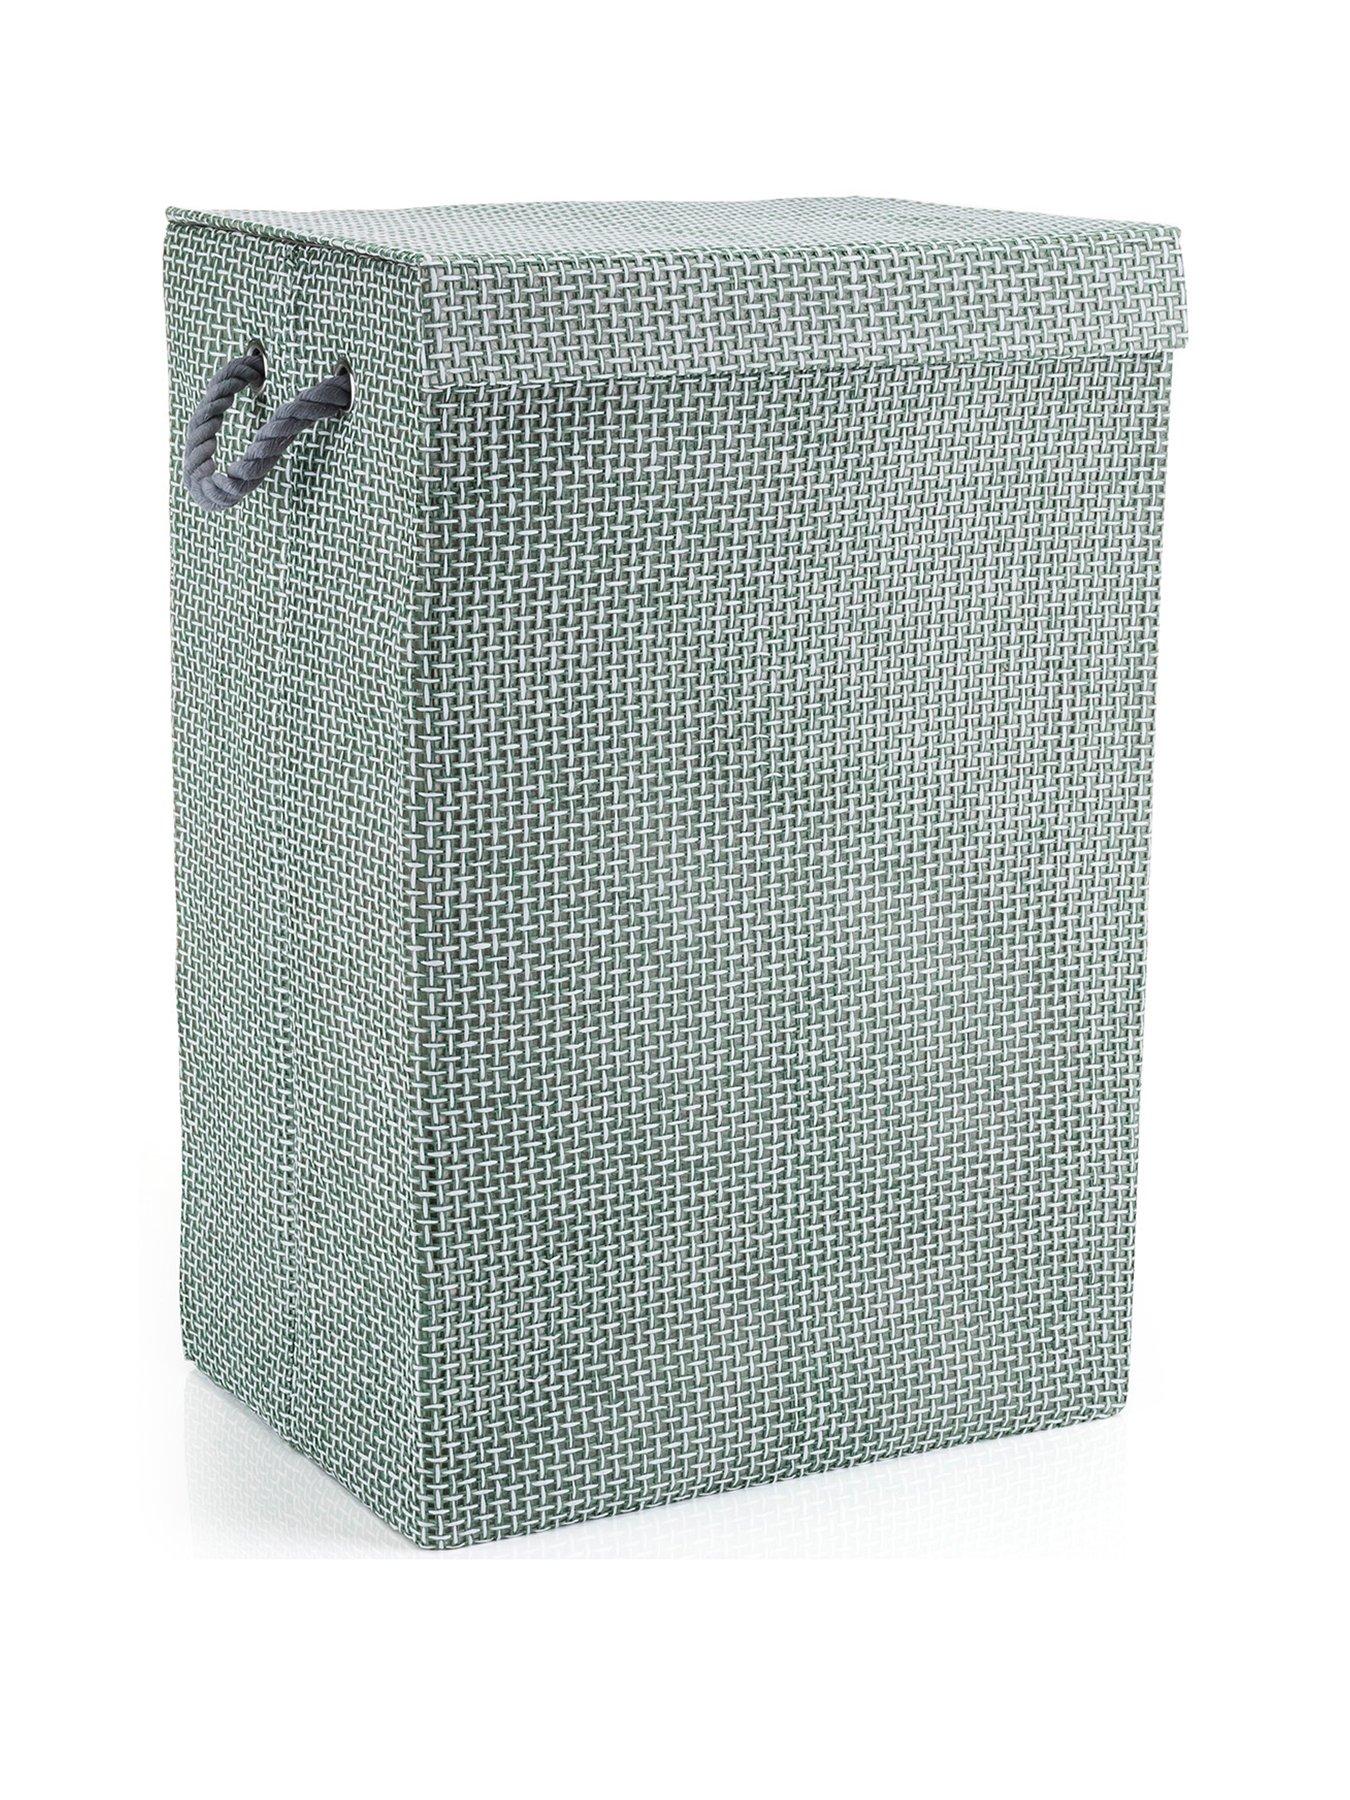 Minky Laundry Hamper/Basket Grey Check In Canvas | very.co.uk